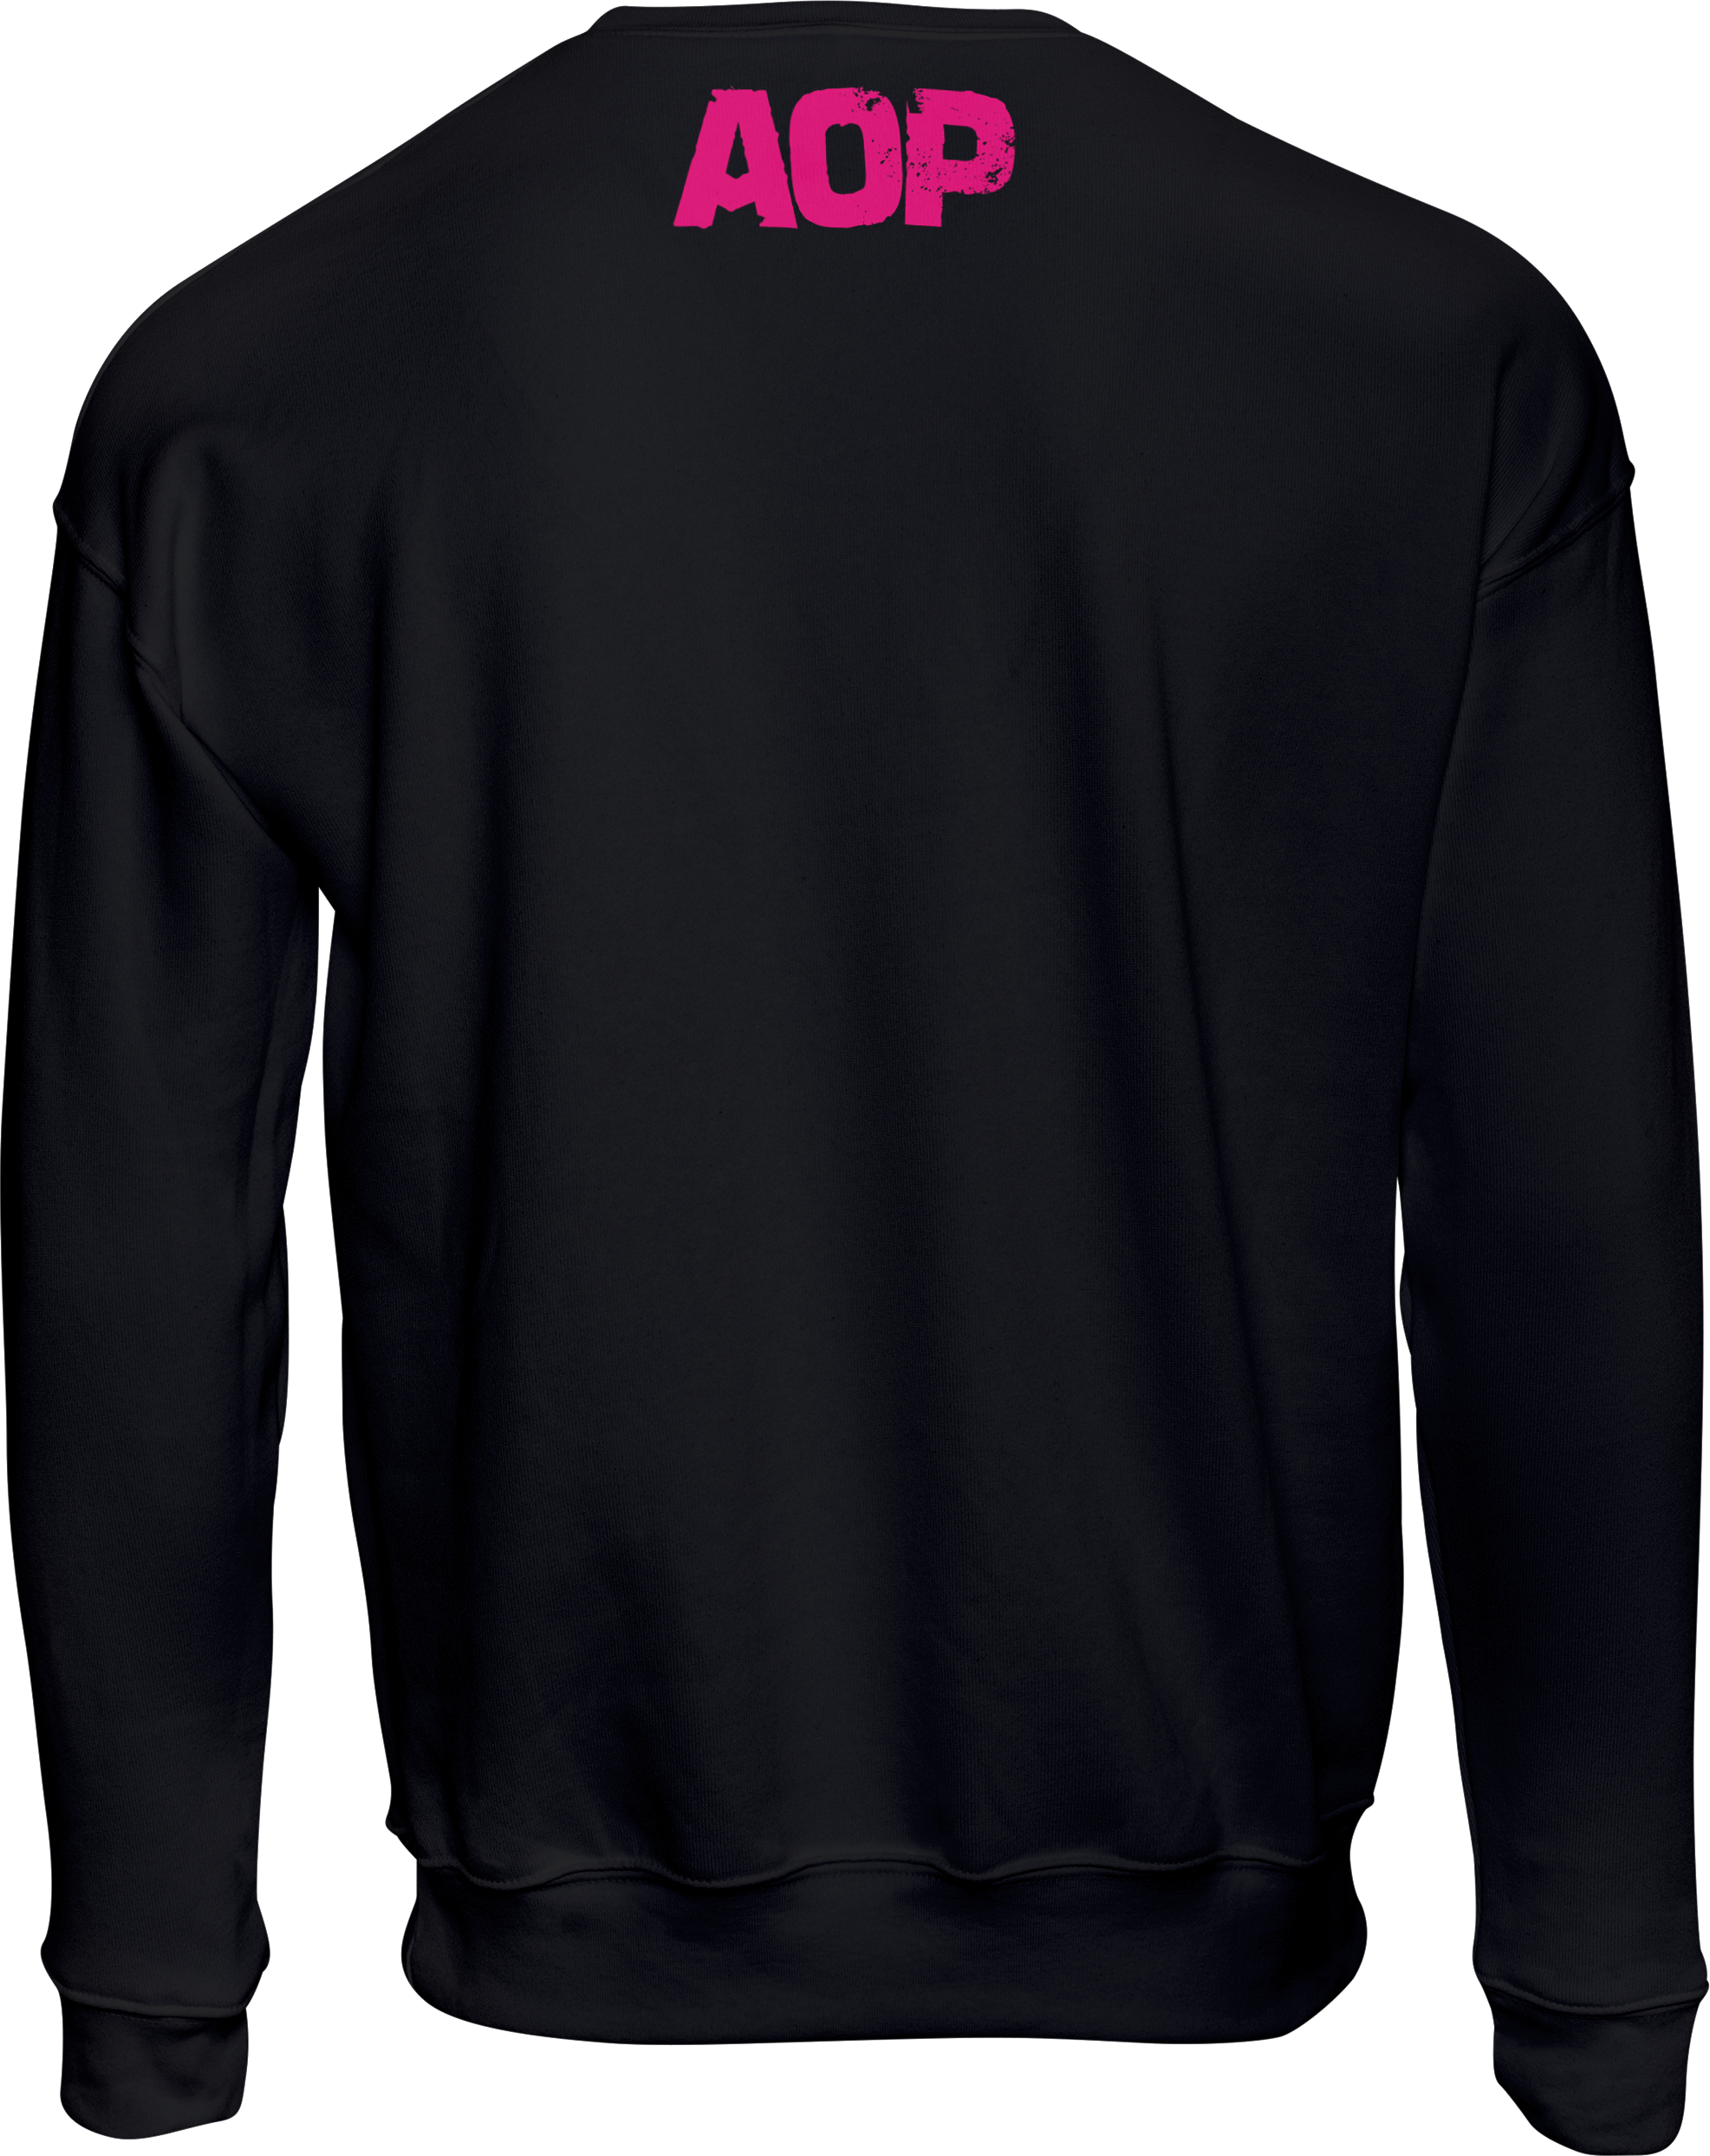 AOP – Von wegen Punkrock Schriftzug – Sweatshirt (schwarz)   